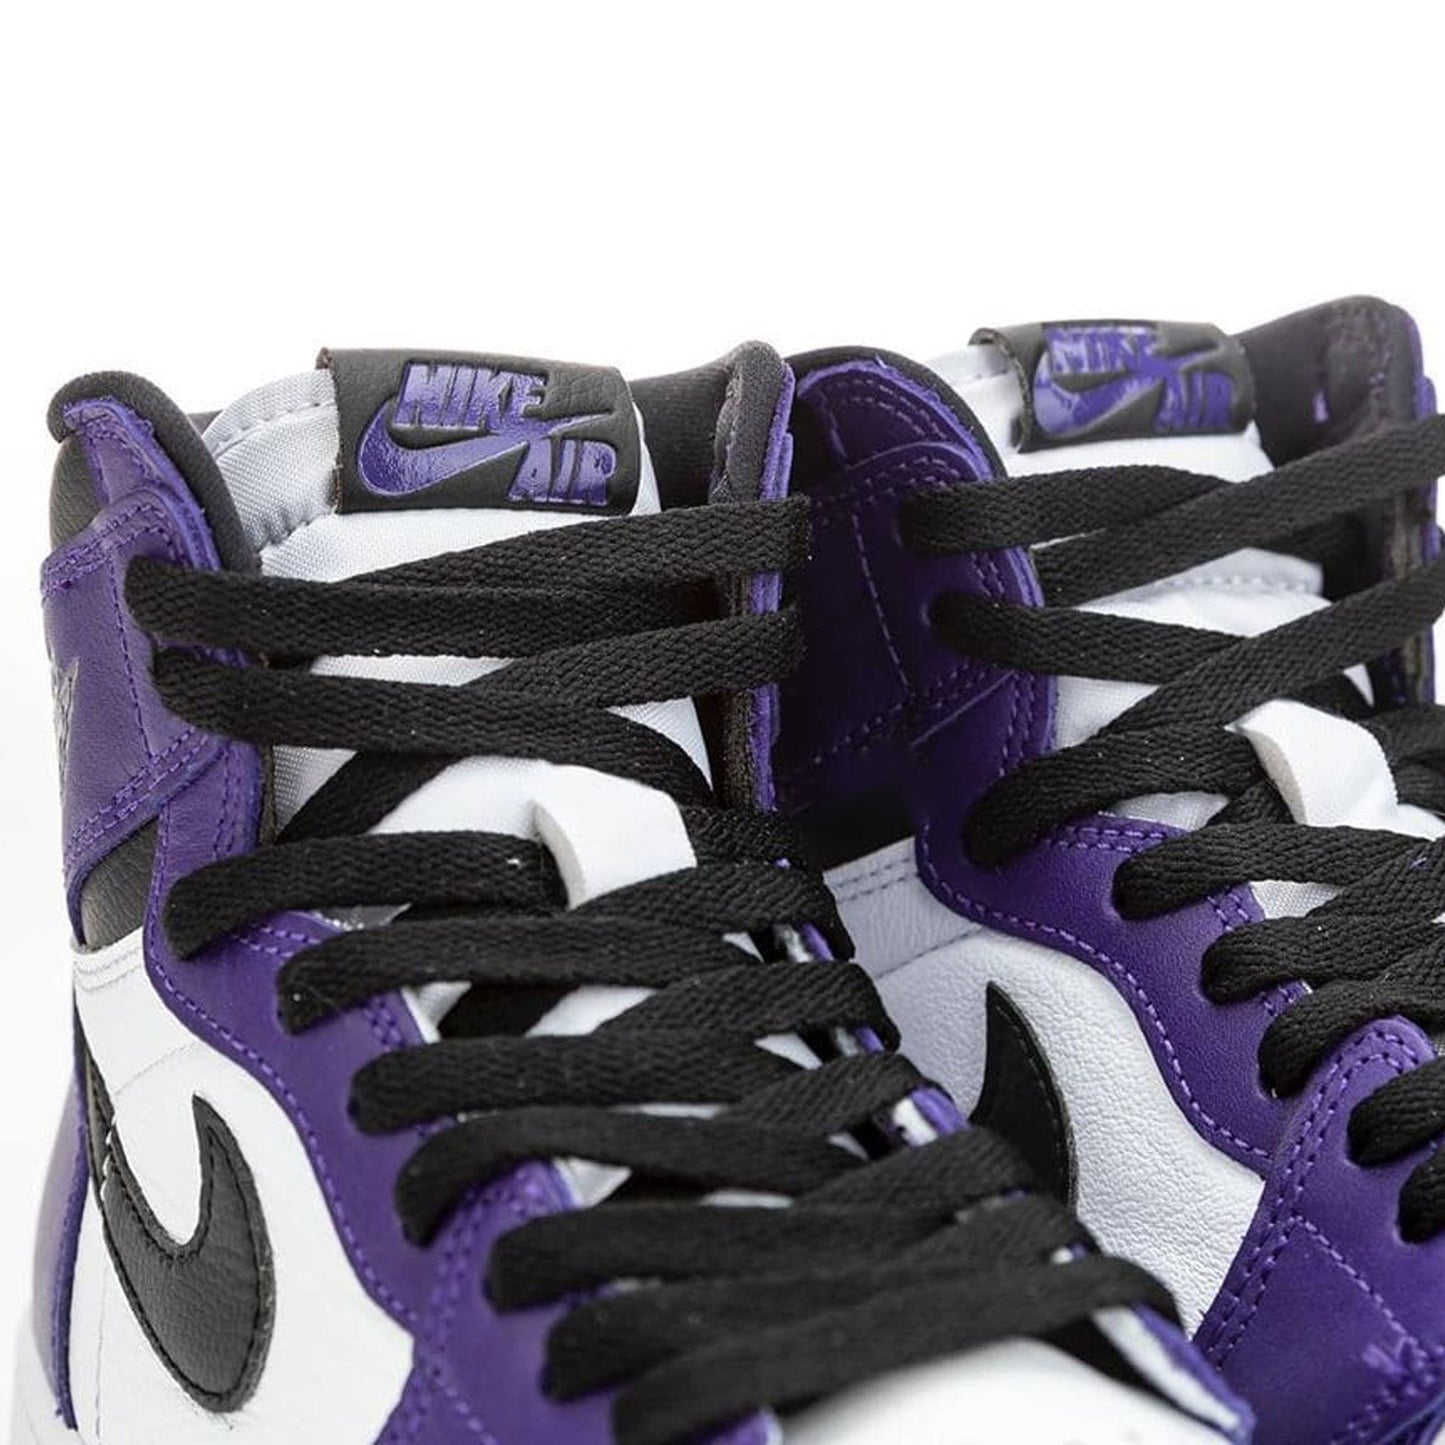 Jordan 1 Retro High Court Purple 2.0 (GS)